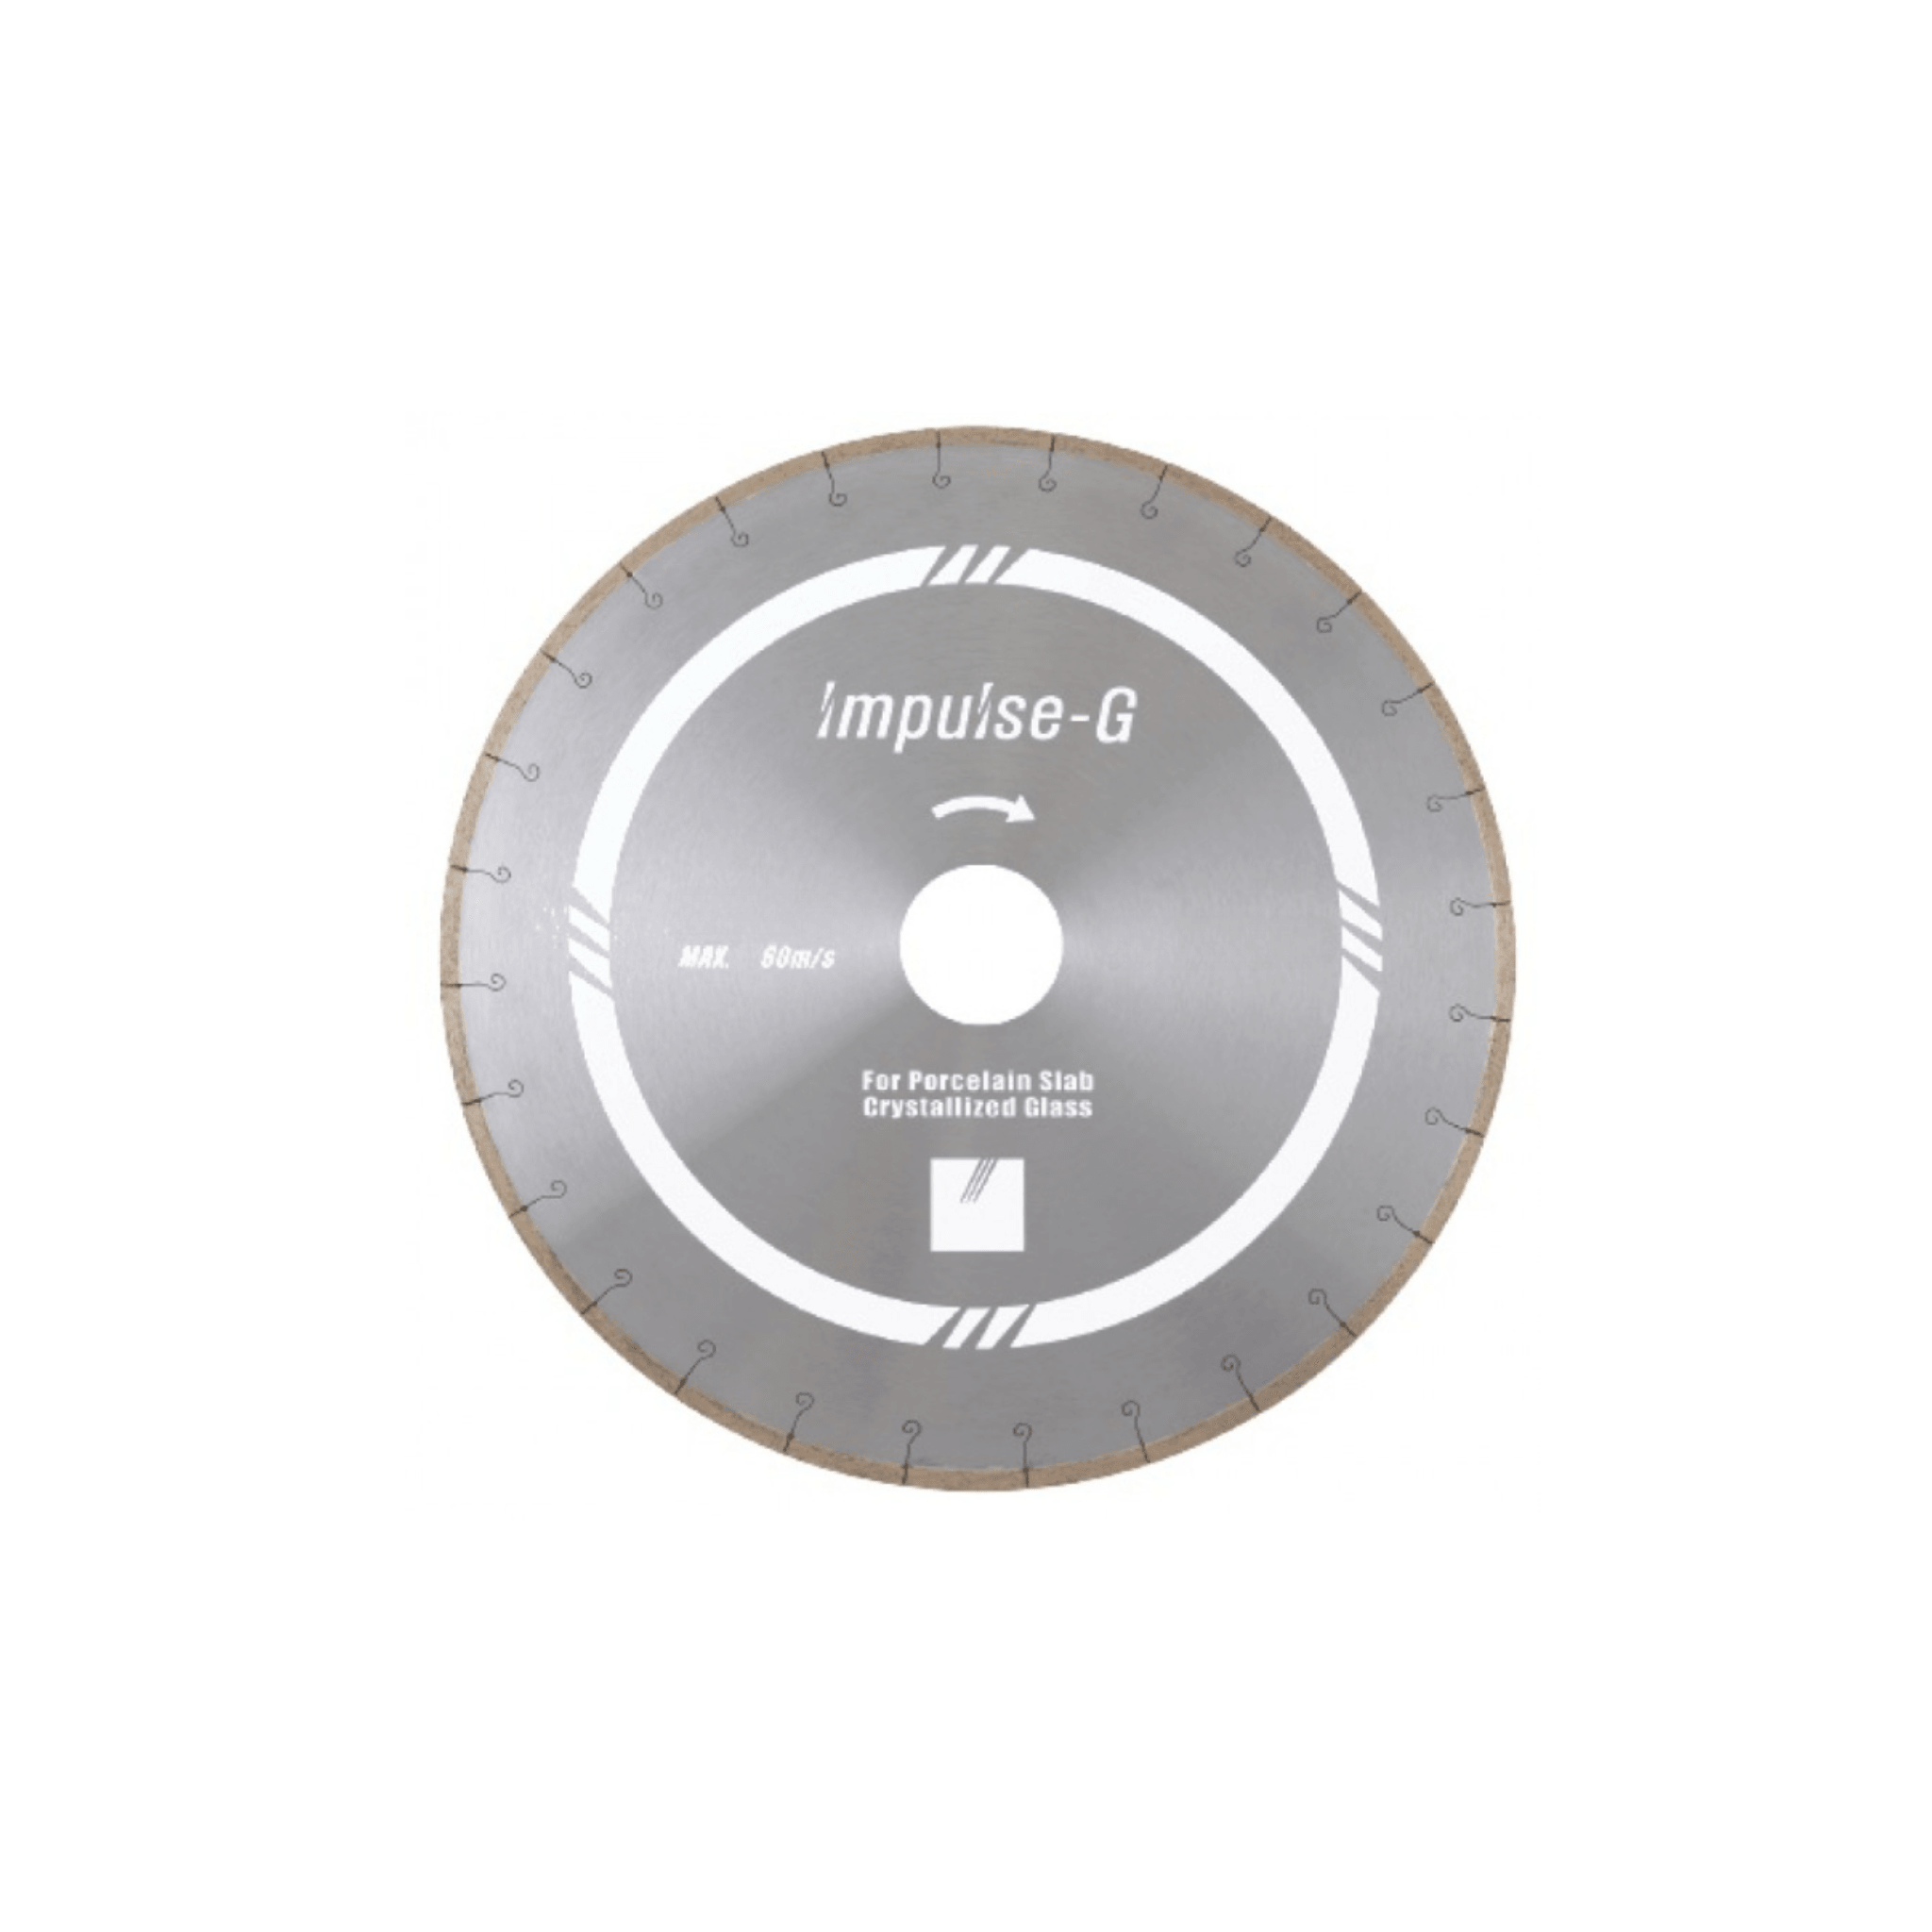 Disco Impulse-G 14" Blade - Direct Stone Tool Supply, Inc